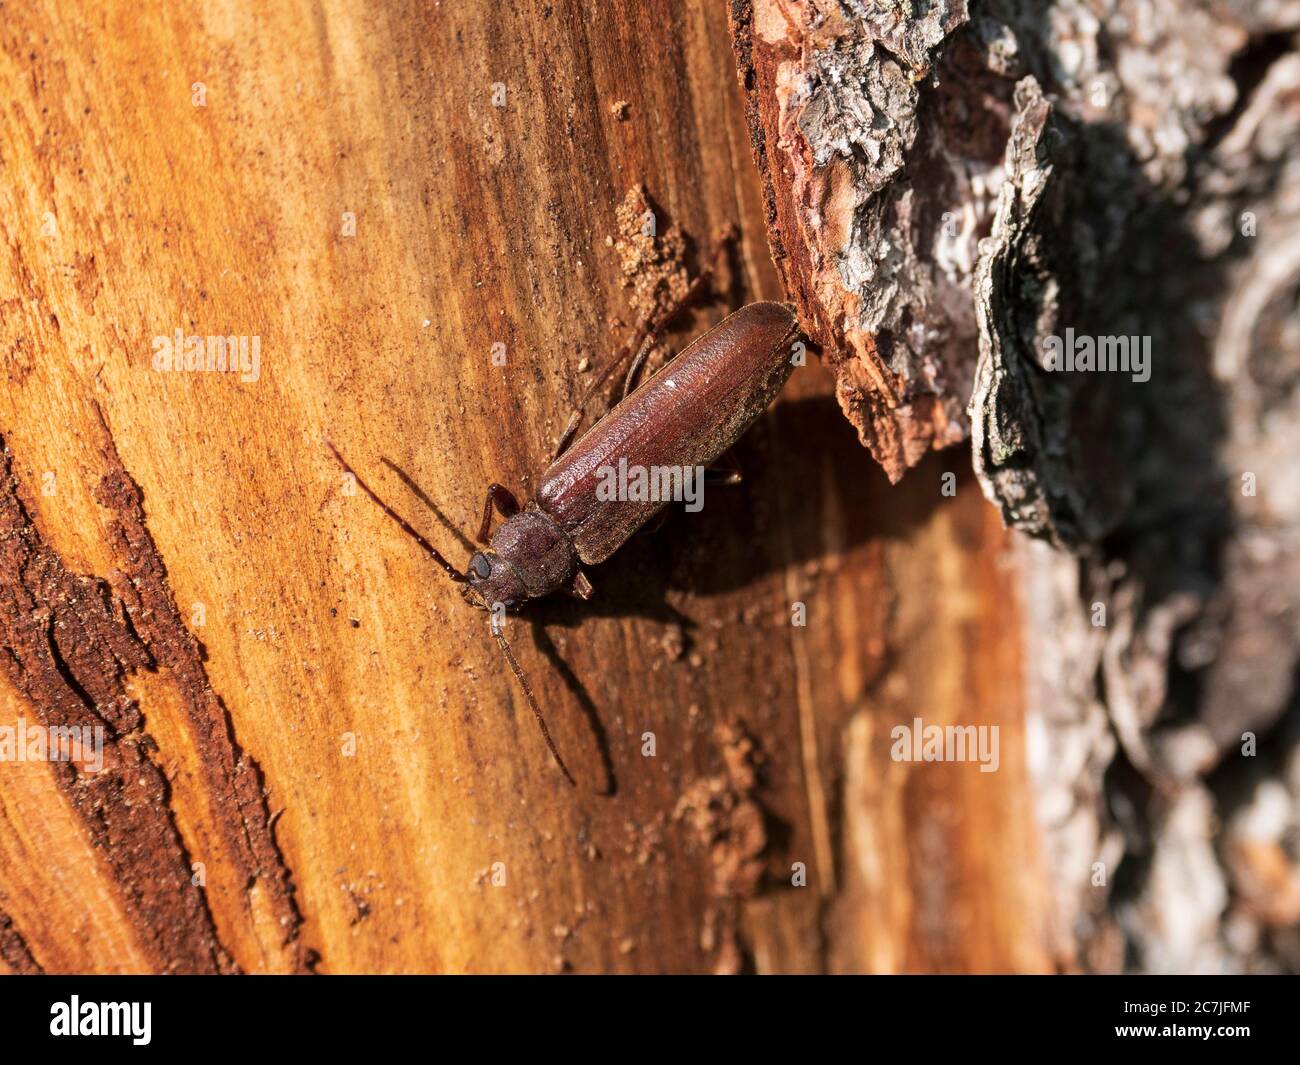 Insecte sur bois mort, Großer Filz / Klosterfilz, Parc National, Bavarois forêt, Bavière, Allemagne Banque D'Images